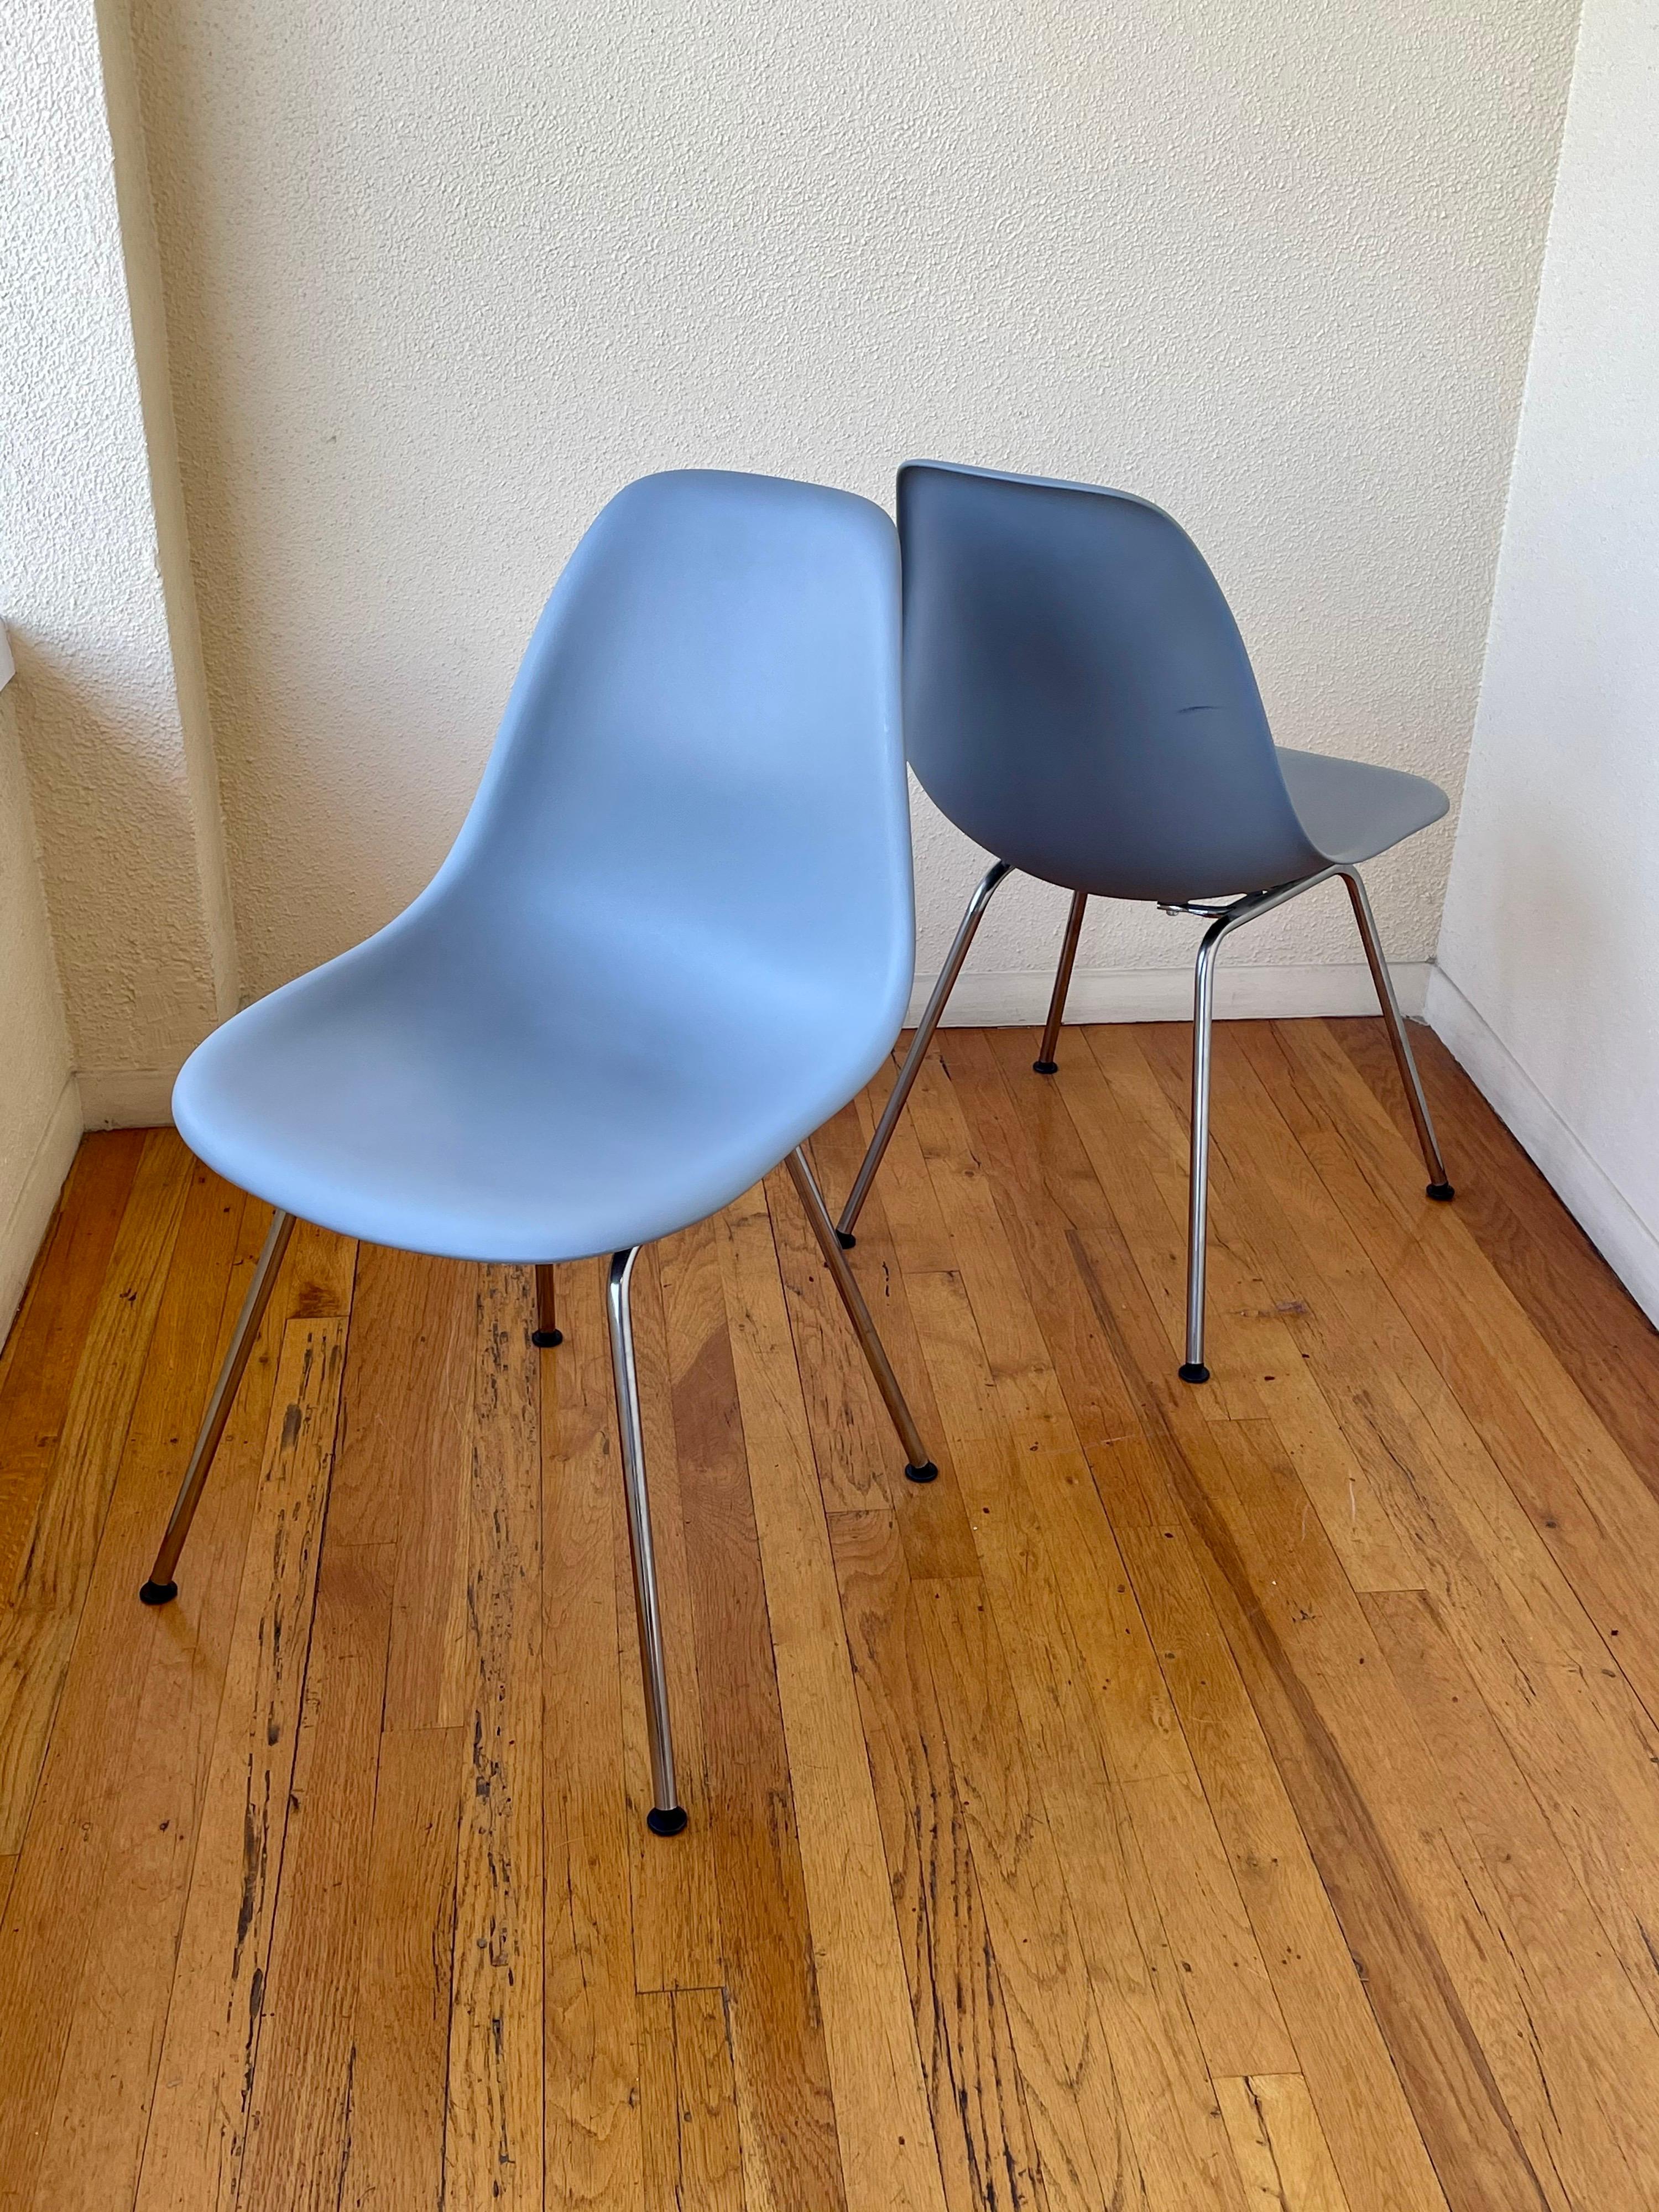 iconic plastic chair